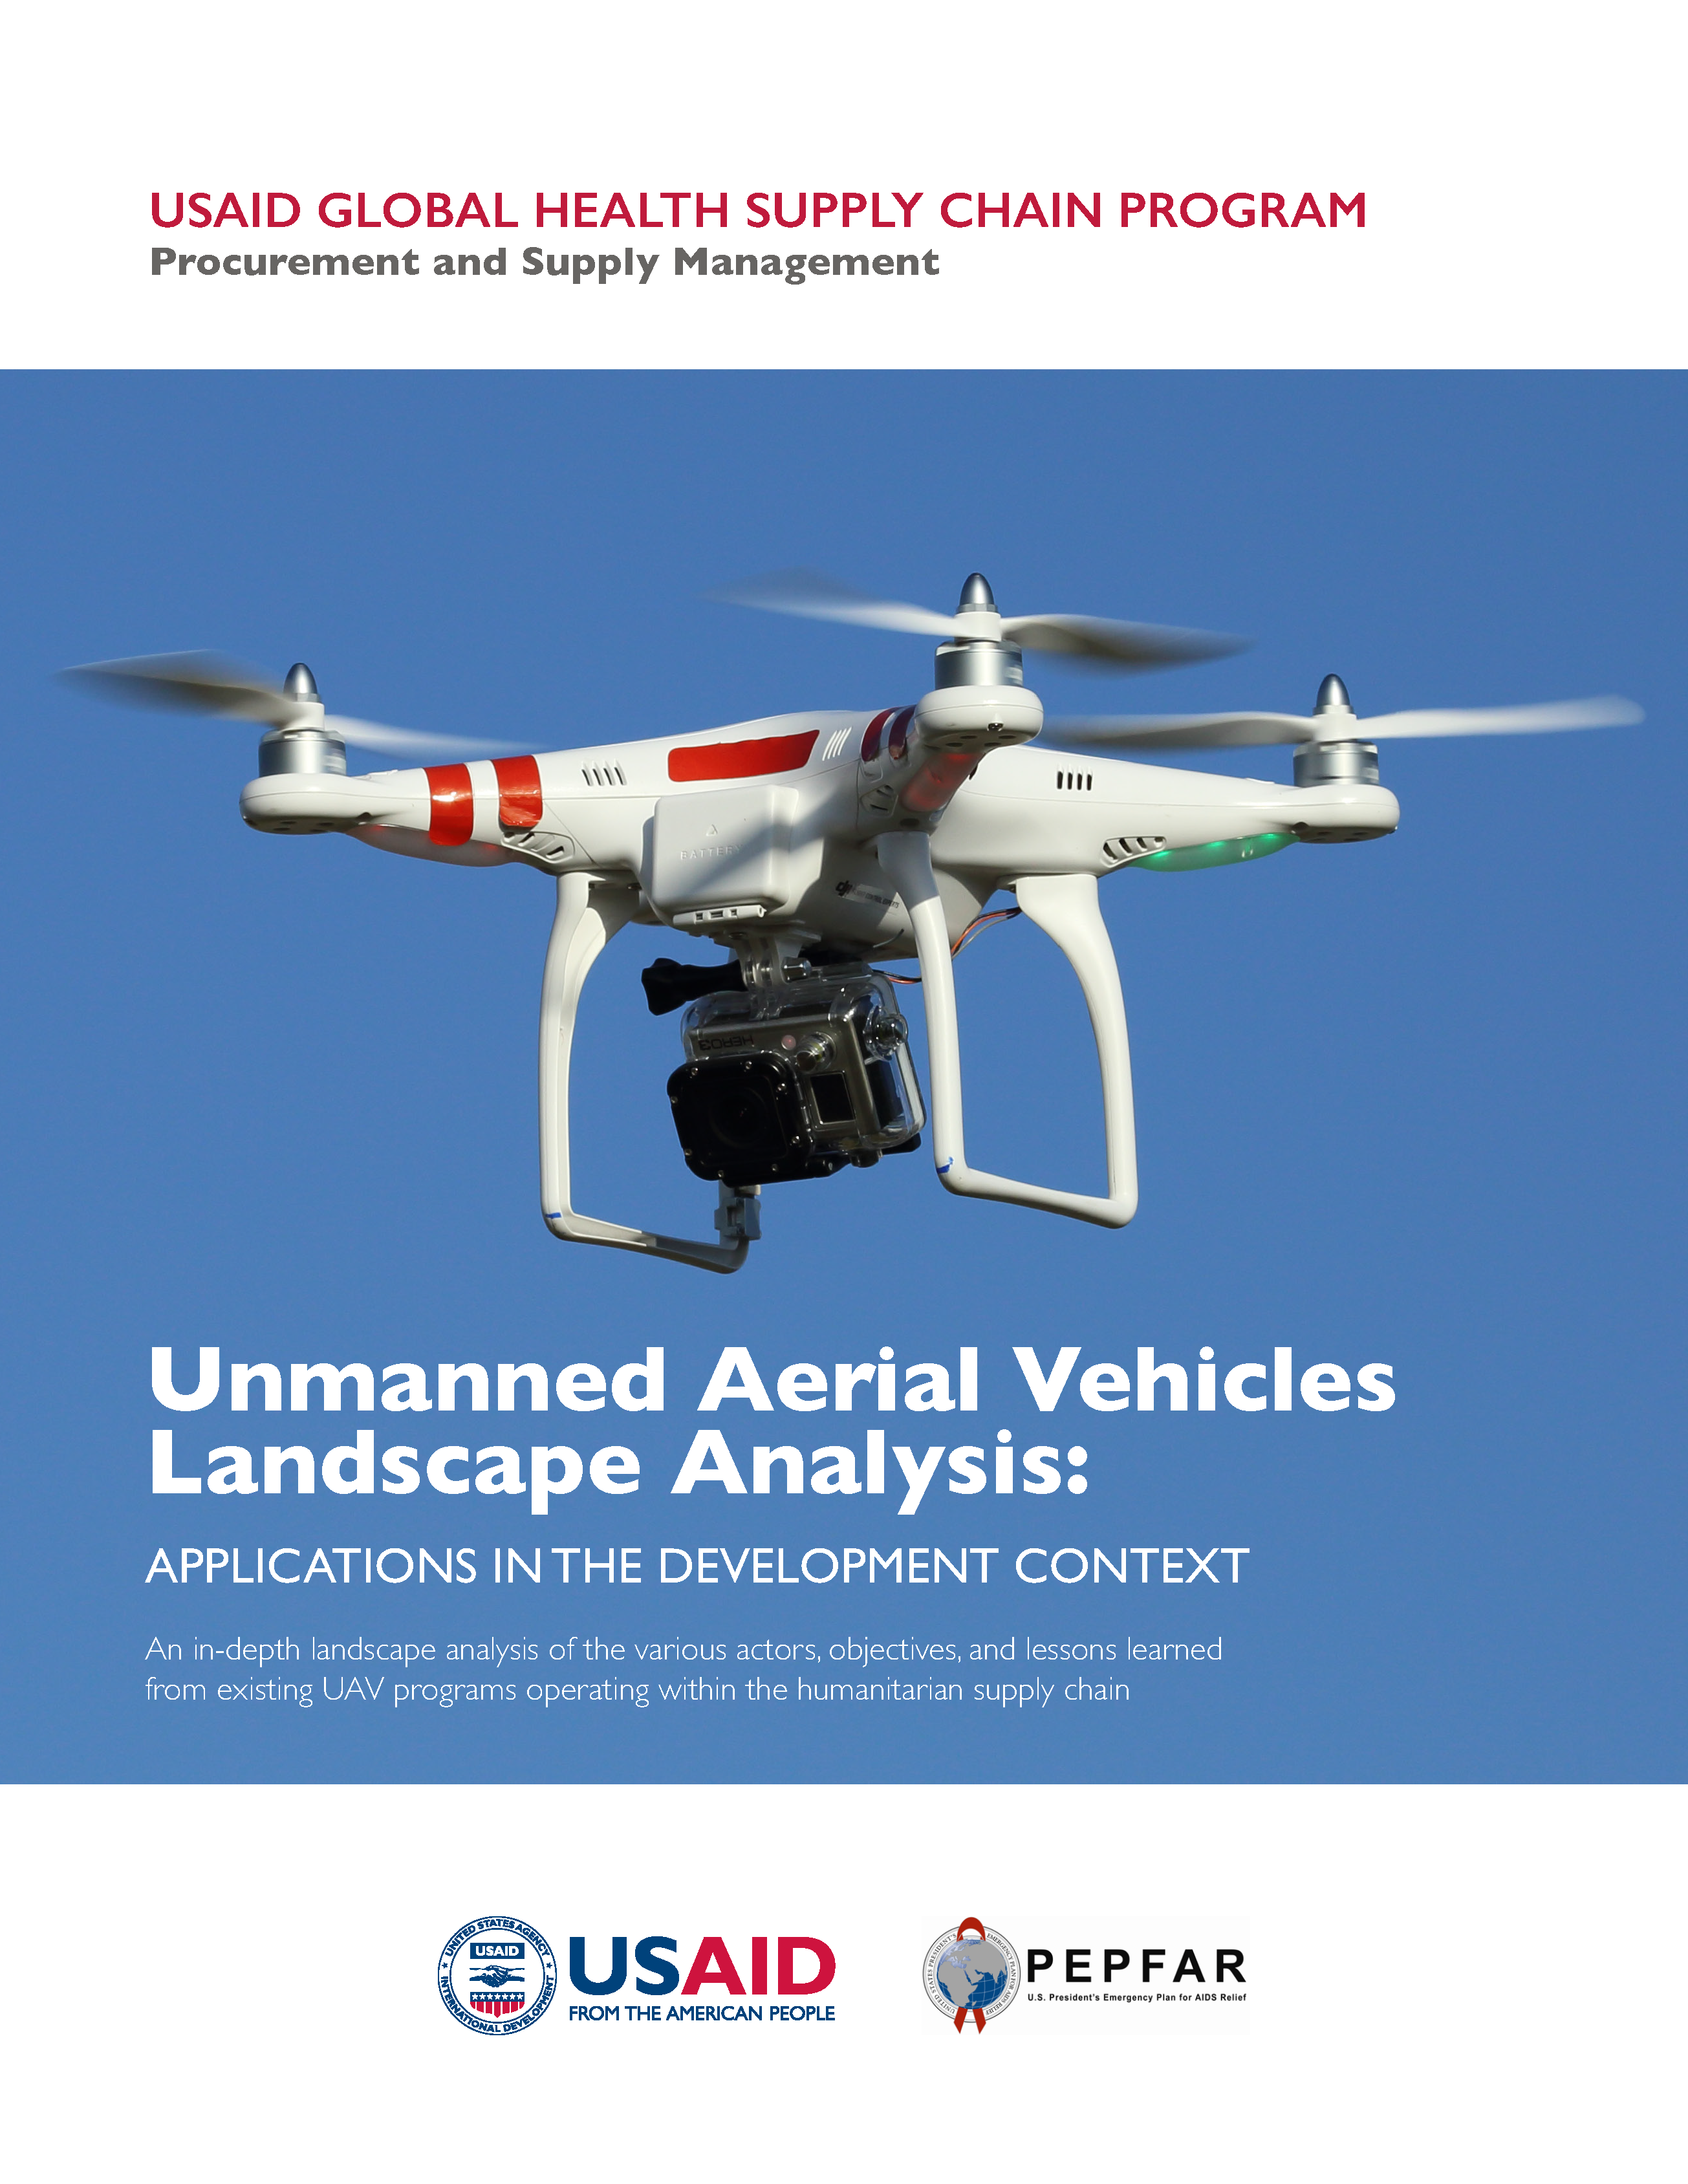 Cover for UAV Analysis report